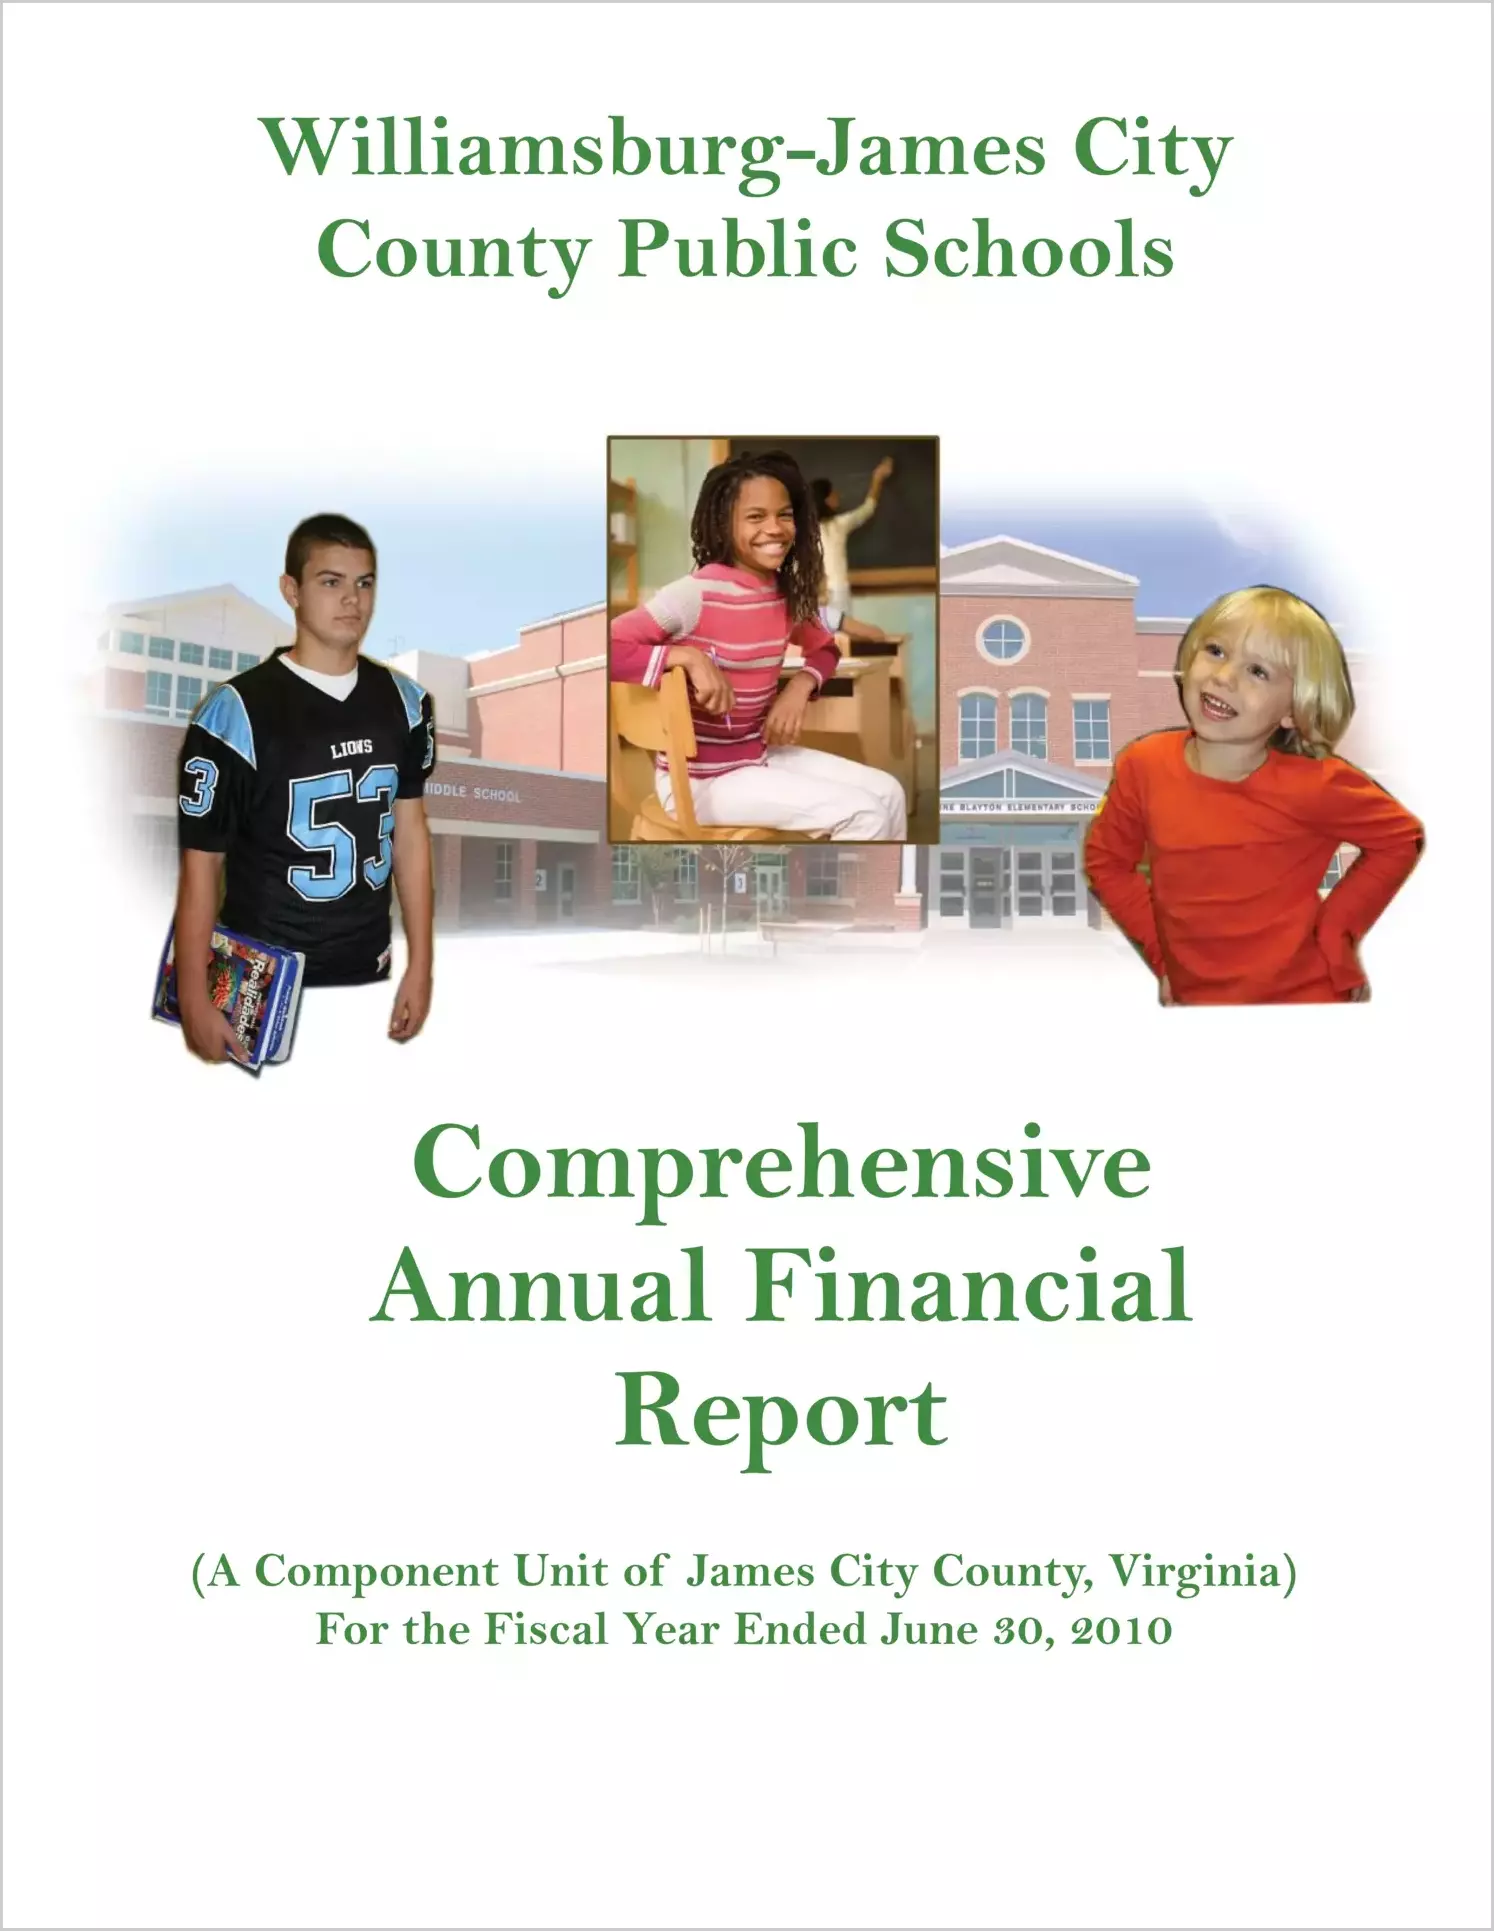 2010 Public Schools Annual Financial Report for City of Williamsburg